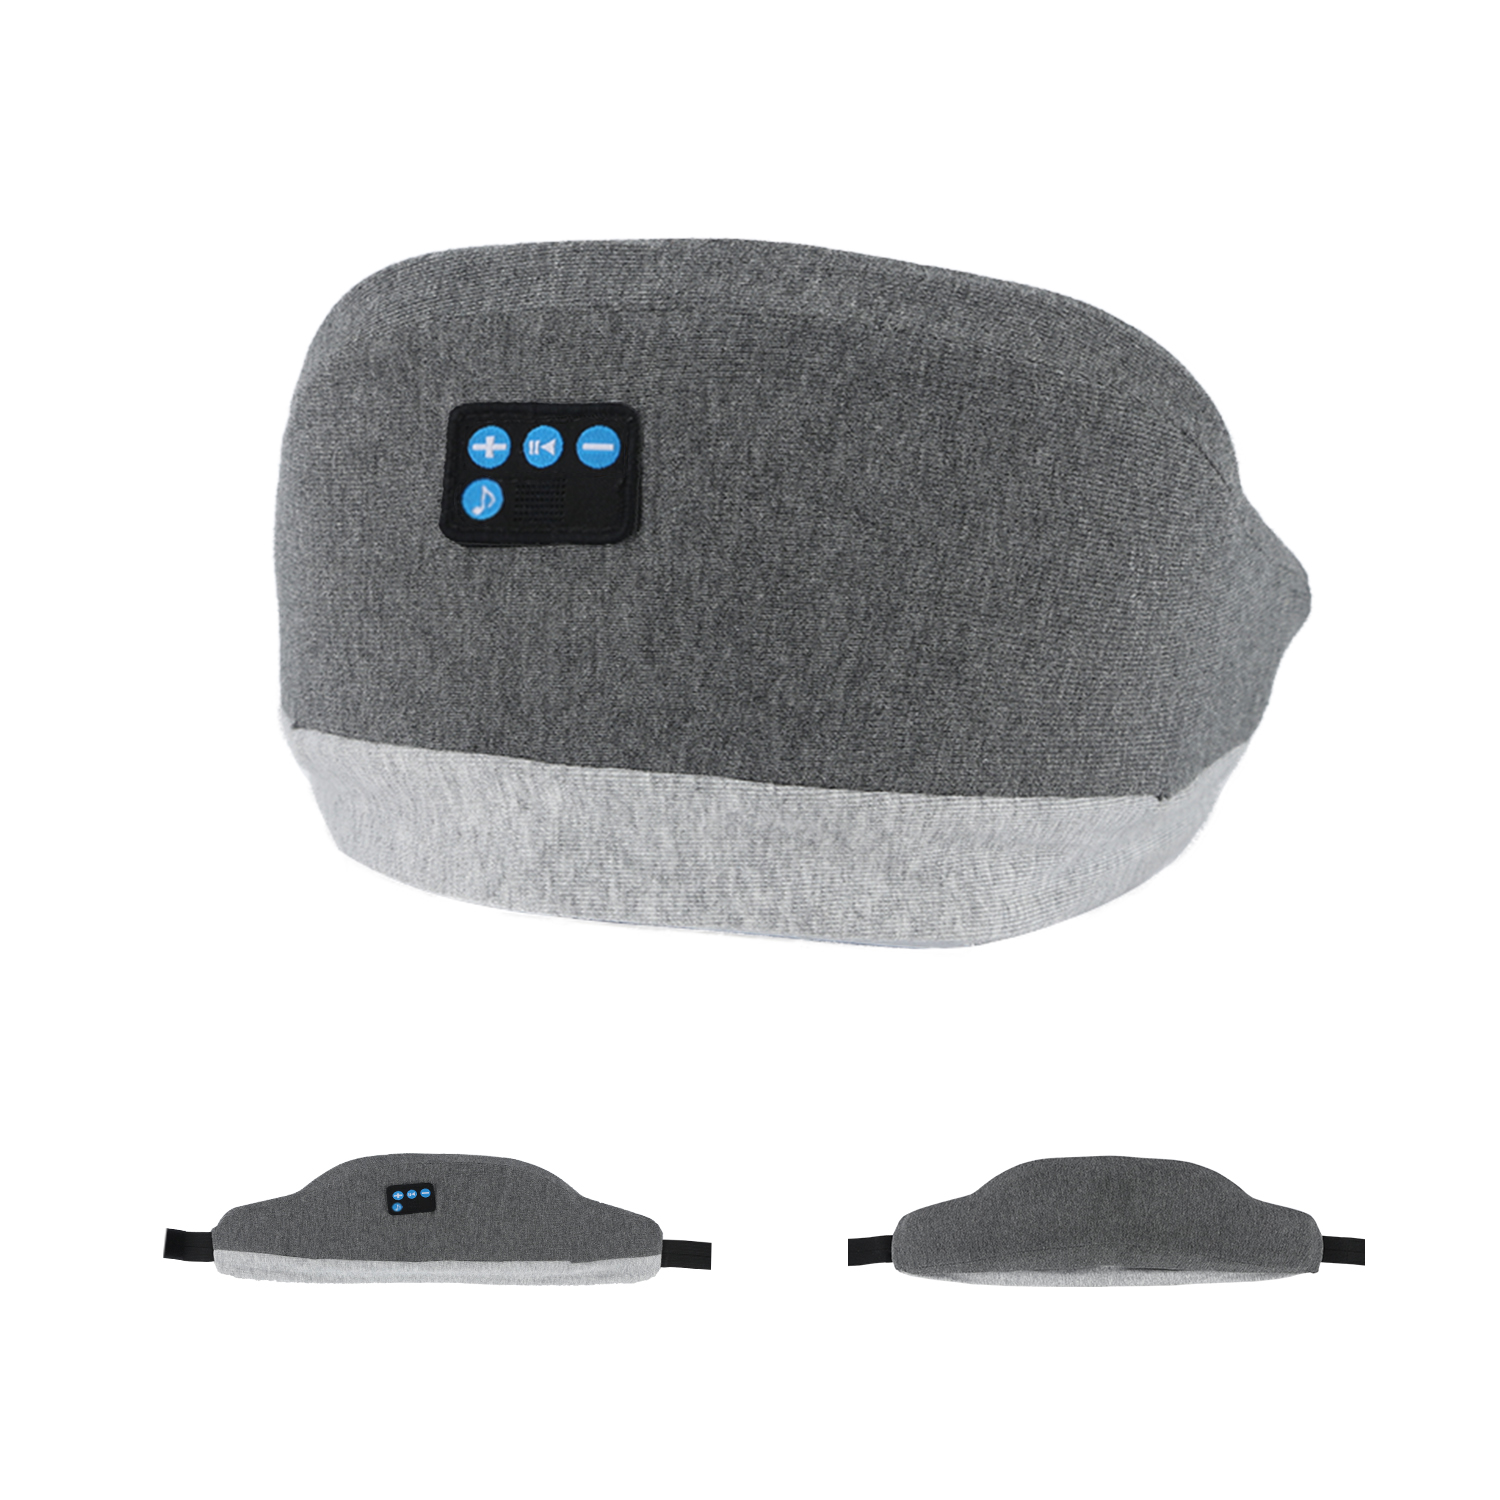 Sofits 3D Sleepmask Soft Sleep Eye Mask Comfortable Blindfold Sleeping Eye Pad with Ear Plug Set